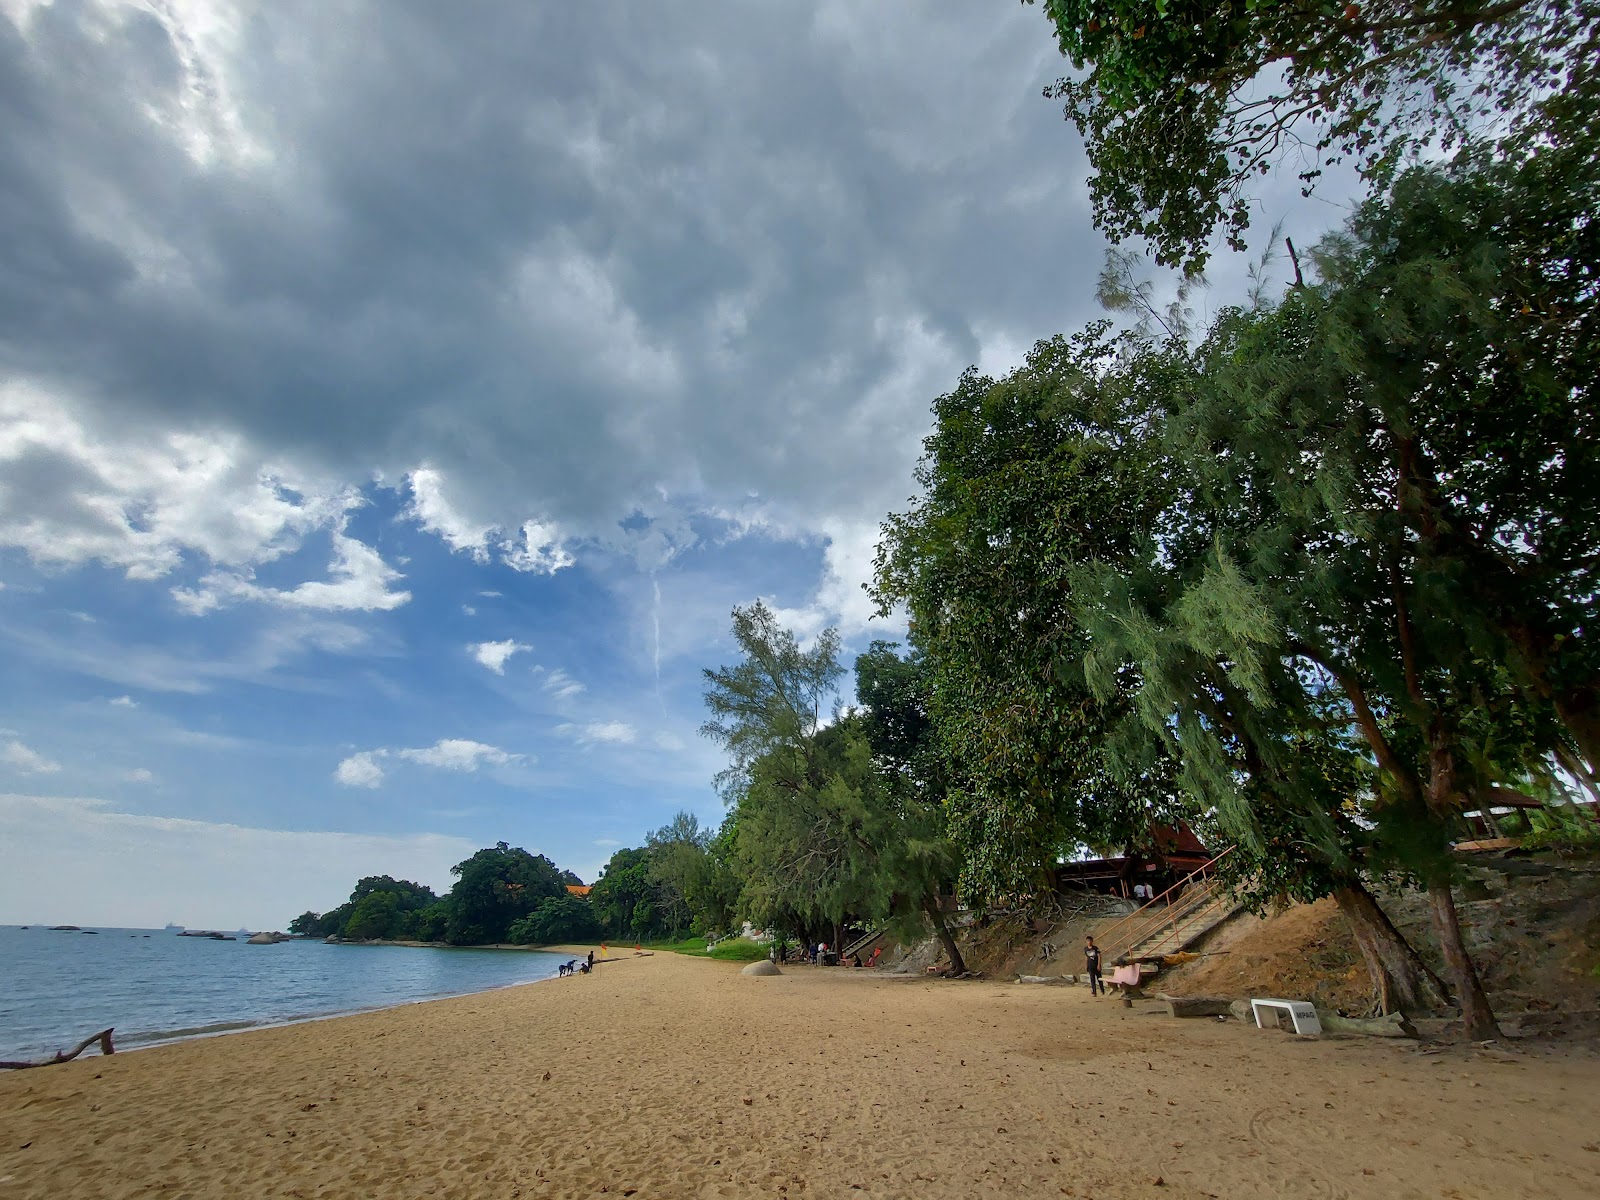 Valokuva Tanjung Bidara Beachista. pinnalla kirkas hiekka:n kanssa